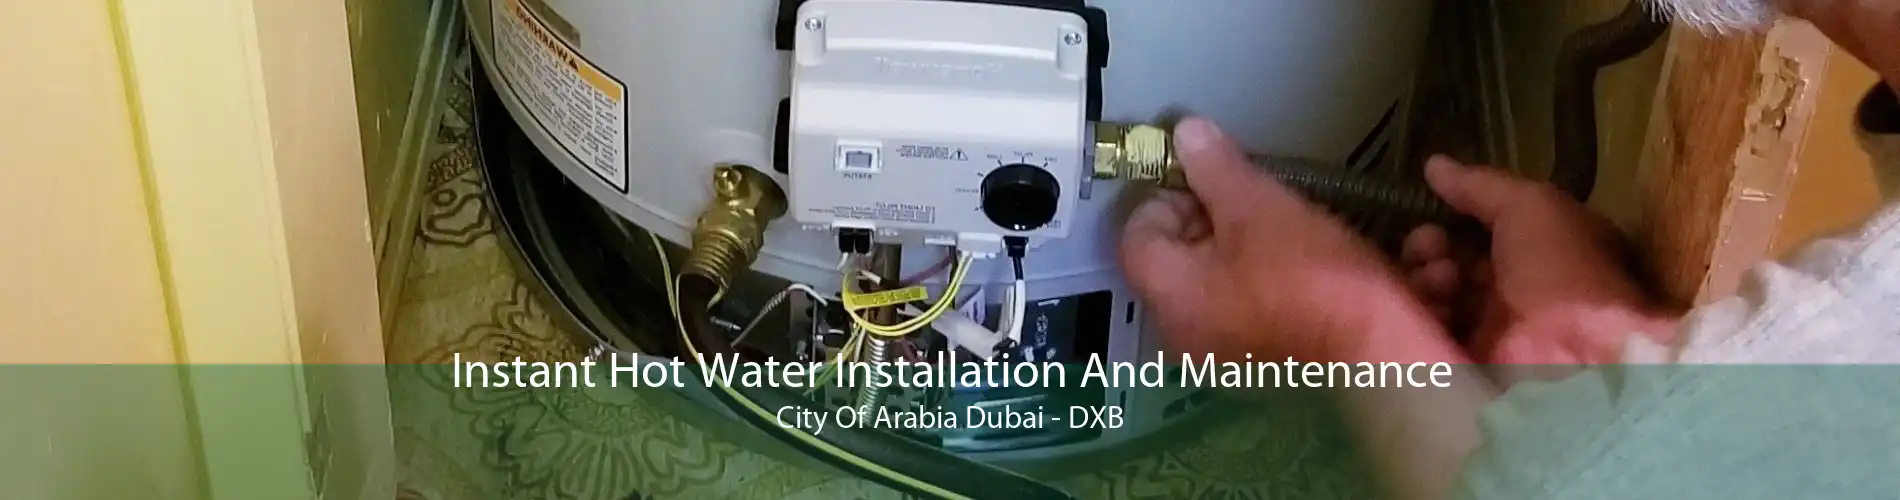 Instant Hot Water Installation And Maintenance City Of Arabia Dubai - DXB